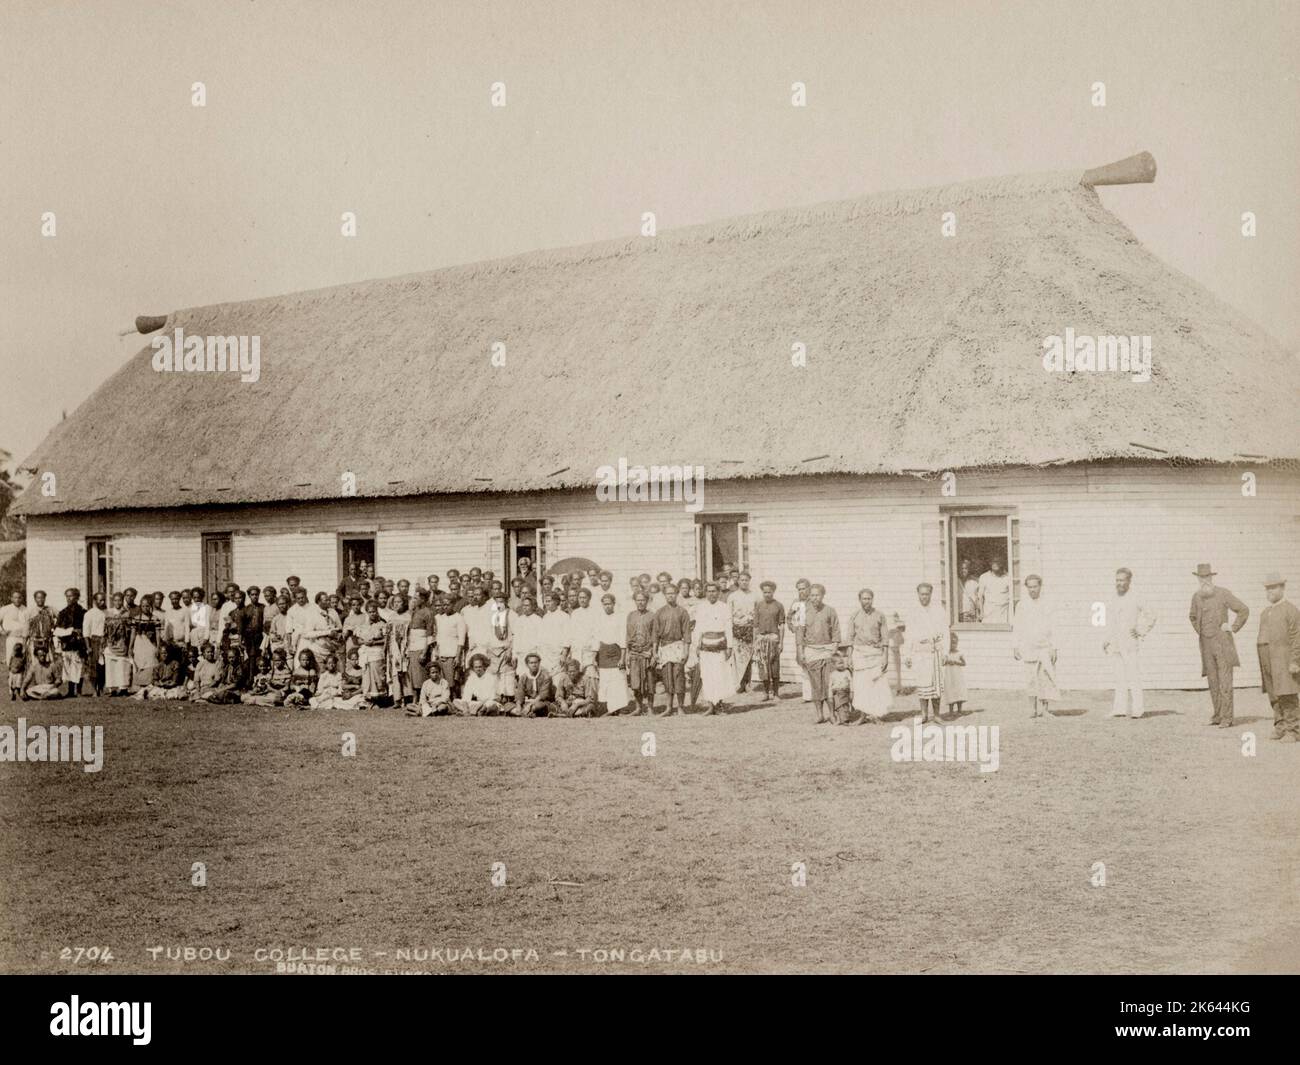 Photographie du XIXe siècle : Tubou College, Nukualofa, Tongatabu, Tonga, Burton Bros studio, c.1884 Banque D'Images